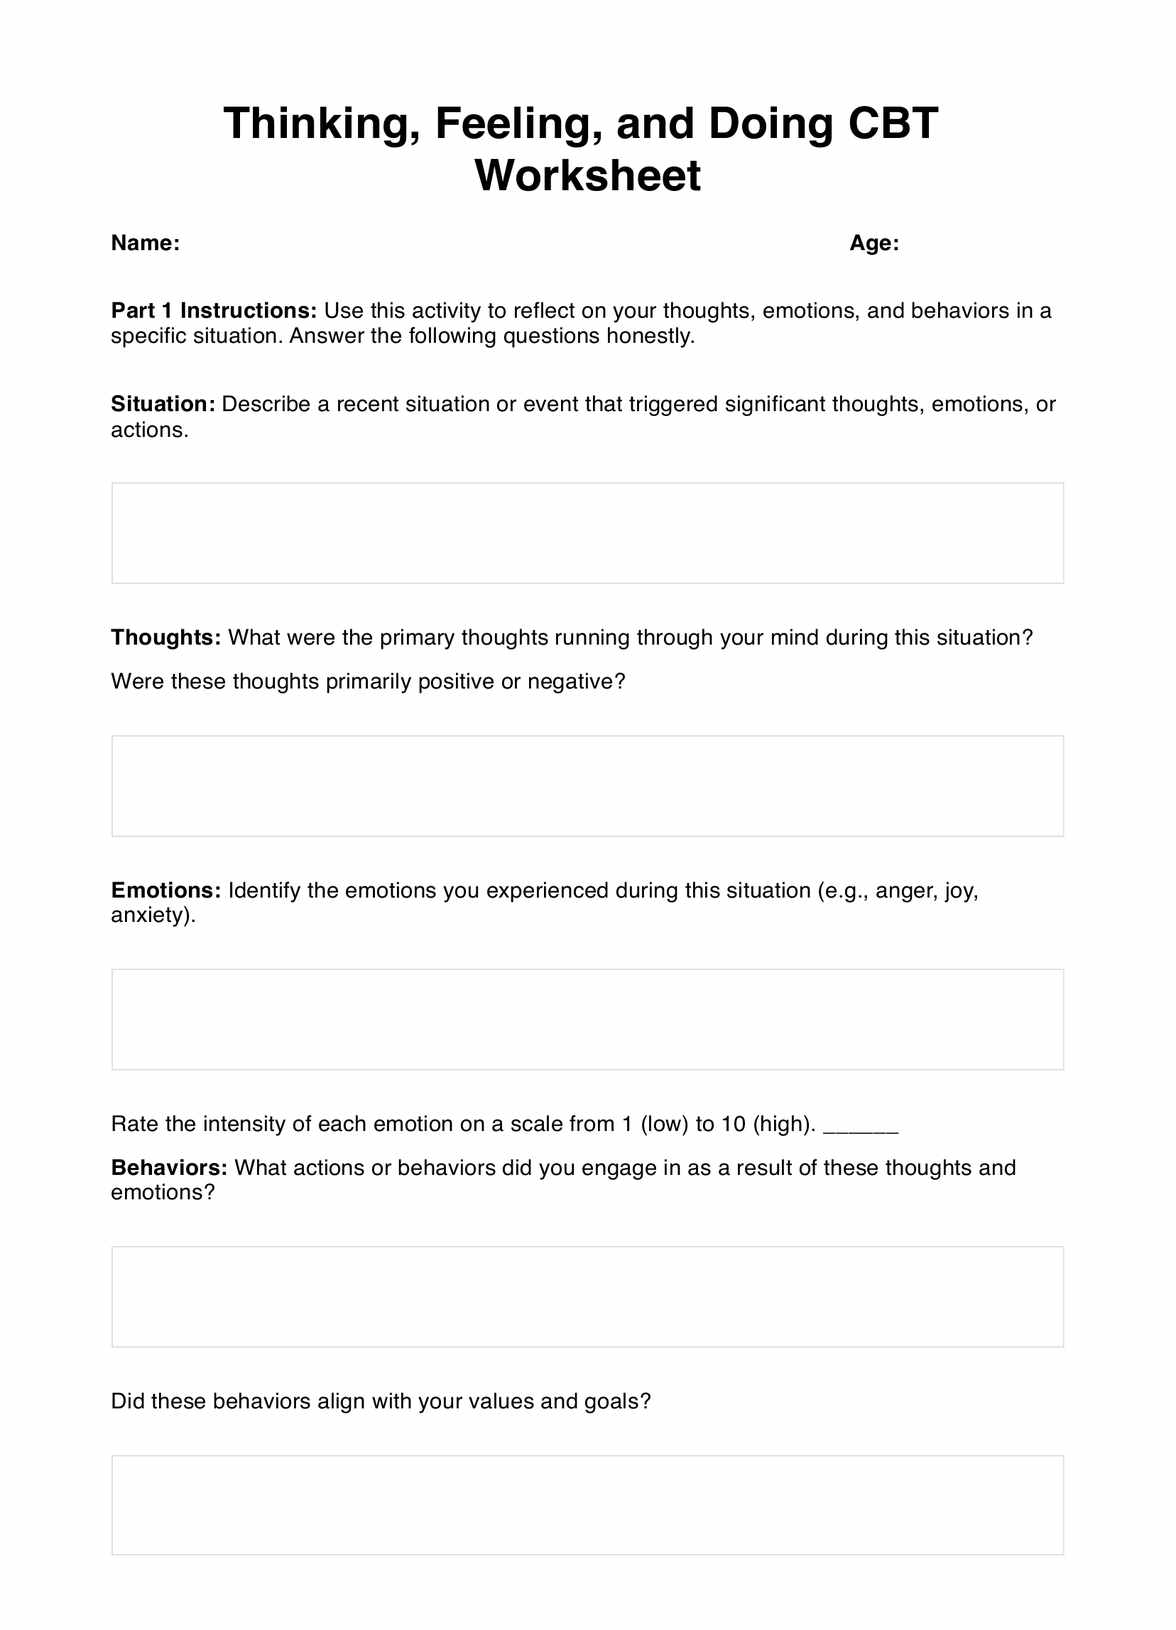 Thinking, Feeling, and Doing CBT Worksheet PDF Example